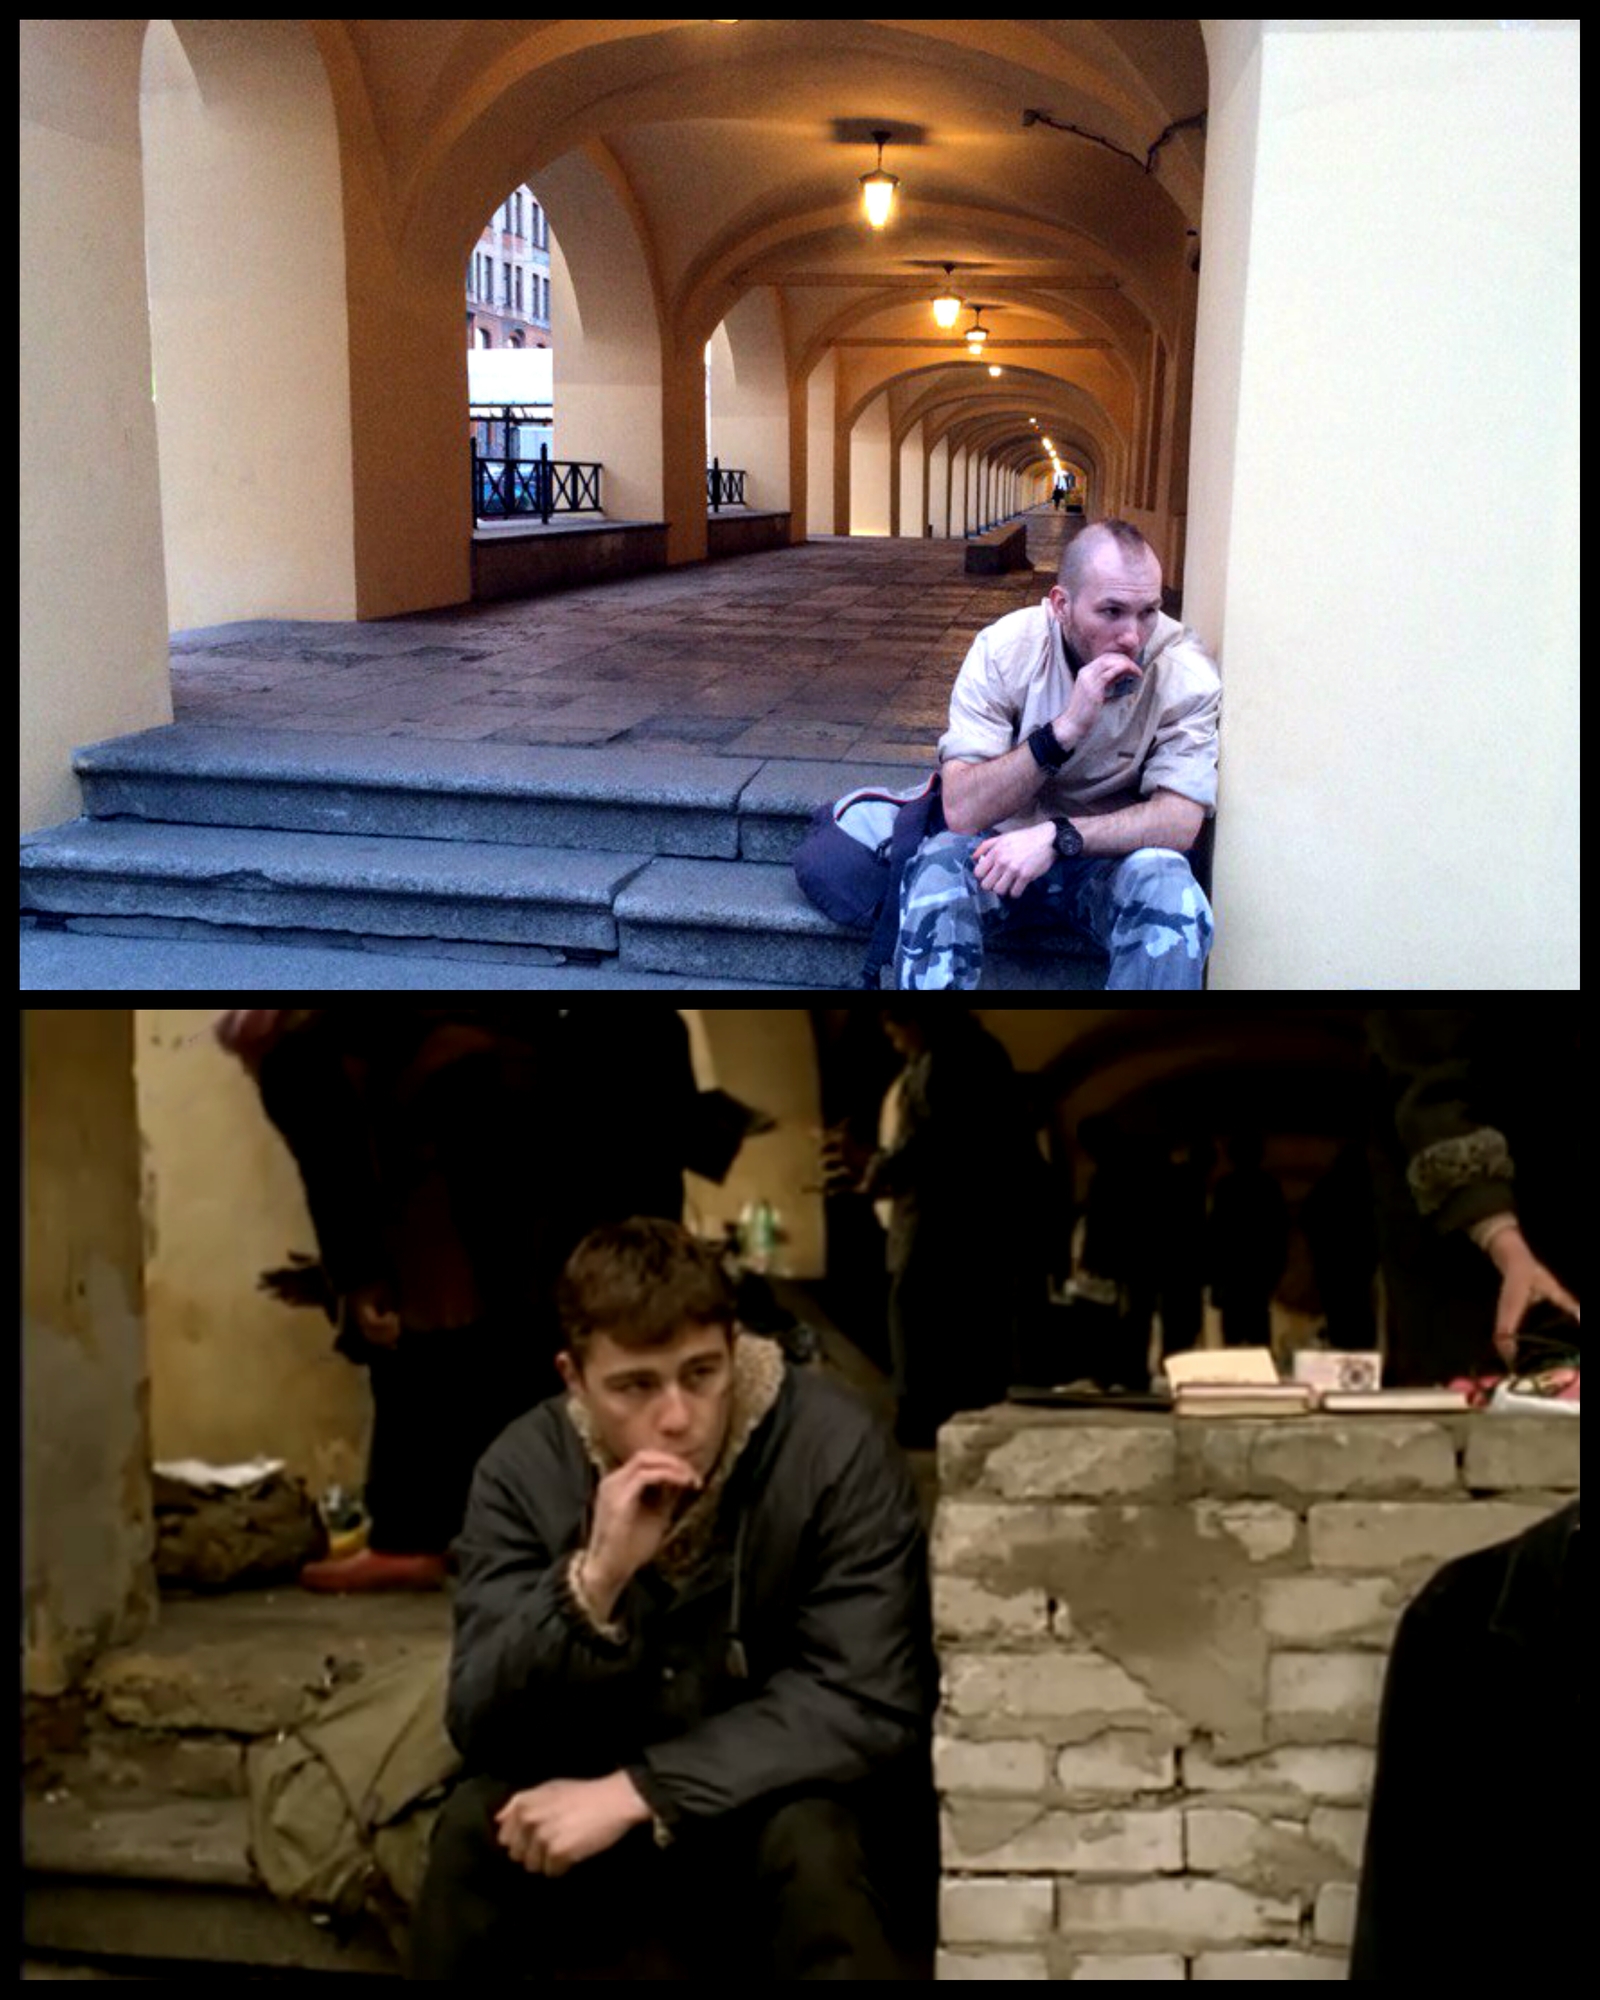 Walk around the filming locations of the film Brother. - My, Brother, Walk, Location, Saint Petersburg, Longpost, Danila Bagrov, Sergey Bodrov